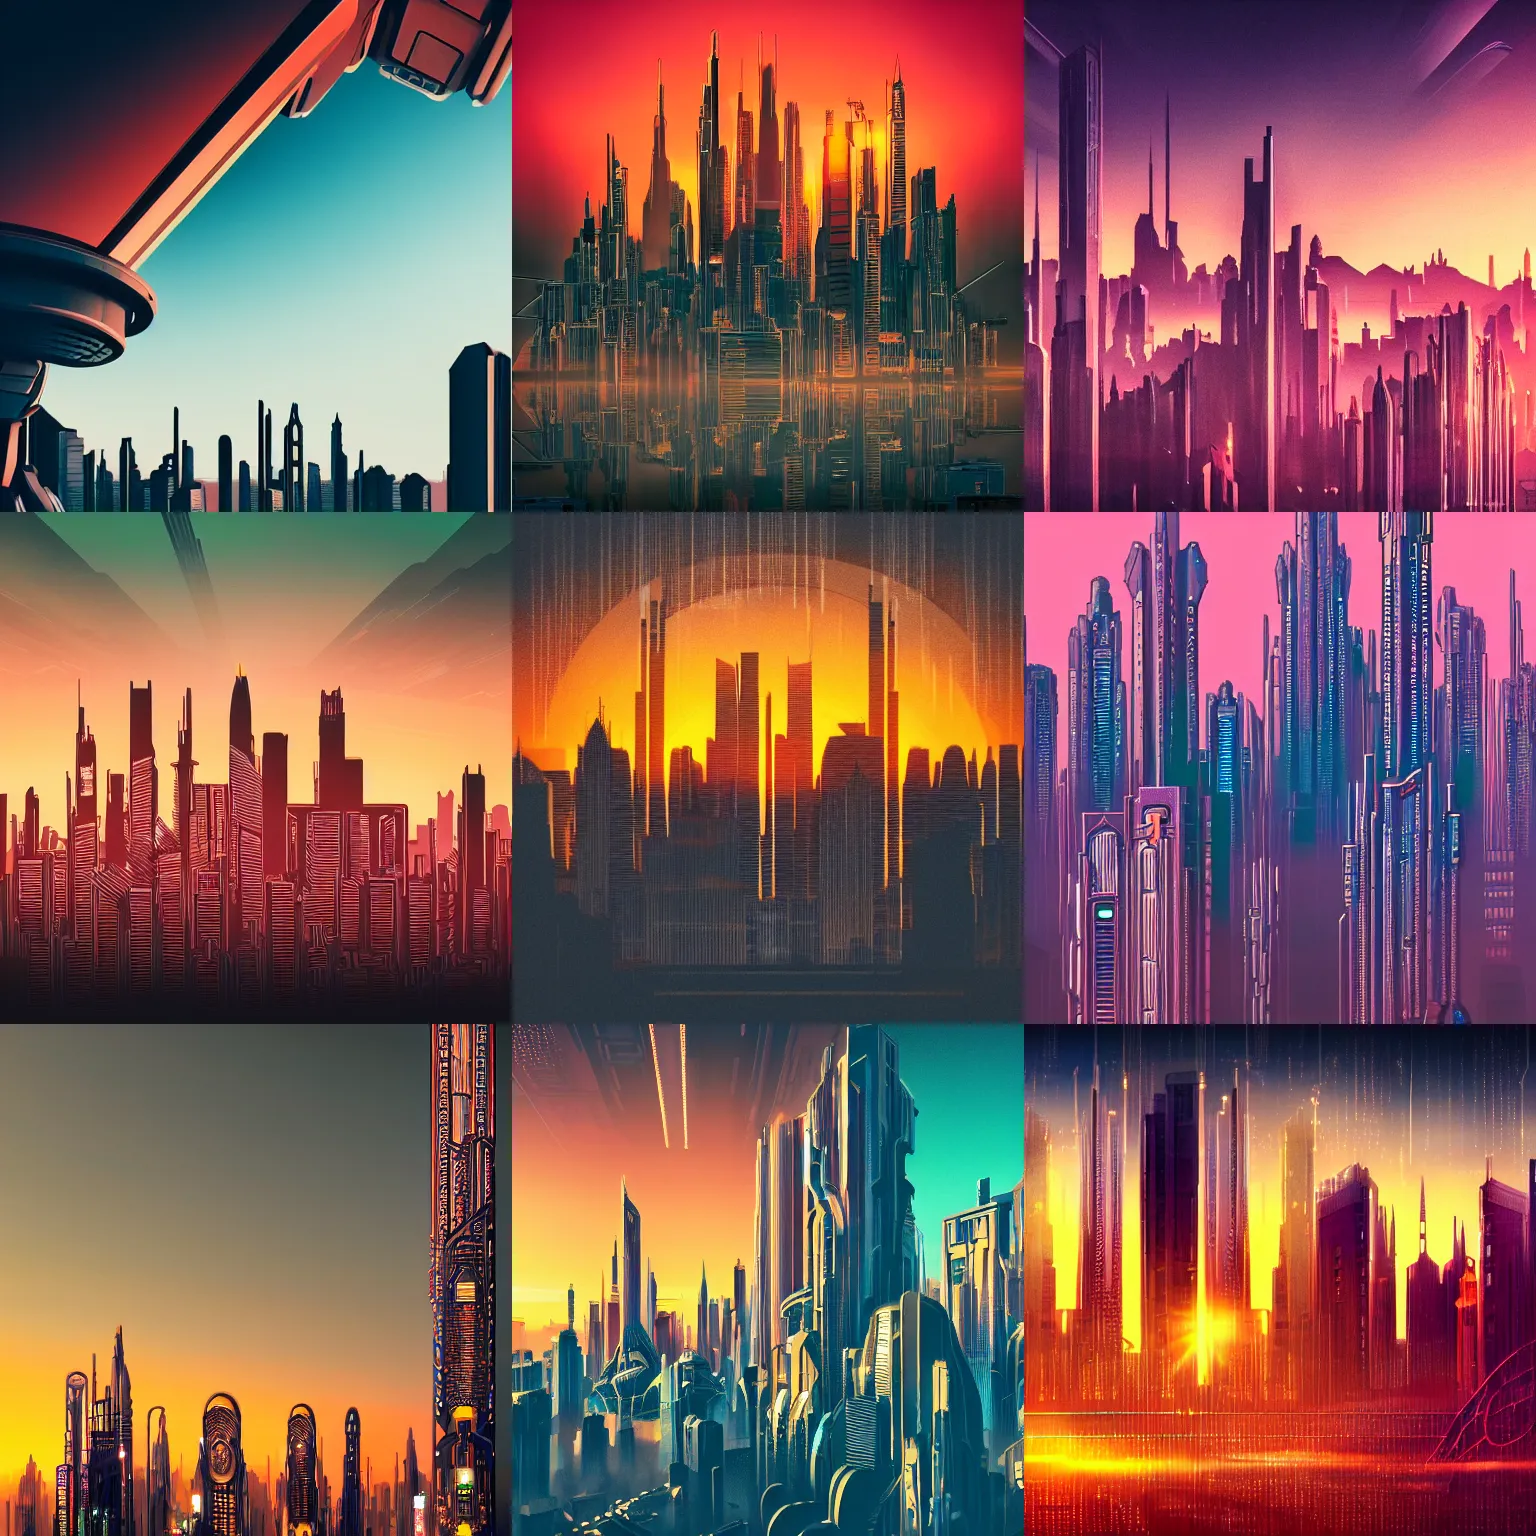 Prompt: detailed photo of a beautiful sci-fi cyberpunk Art Deco skyline at sunset